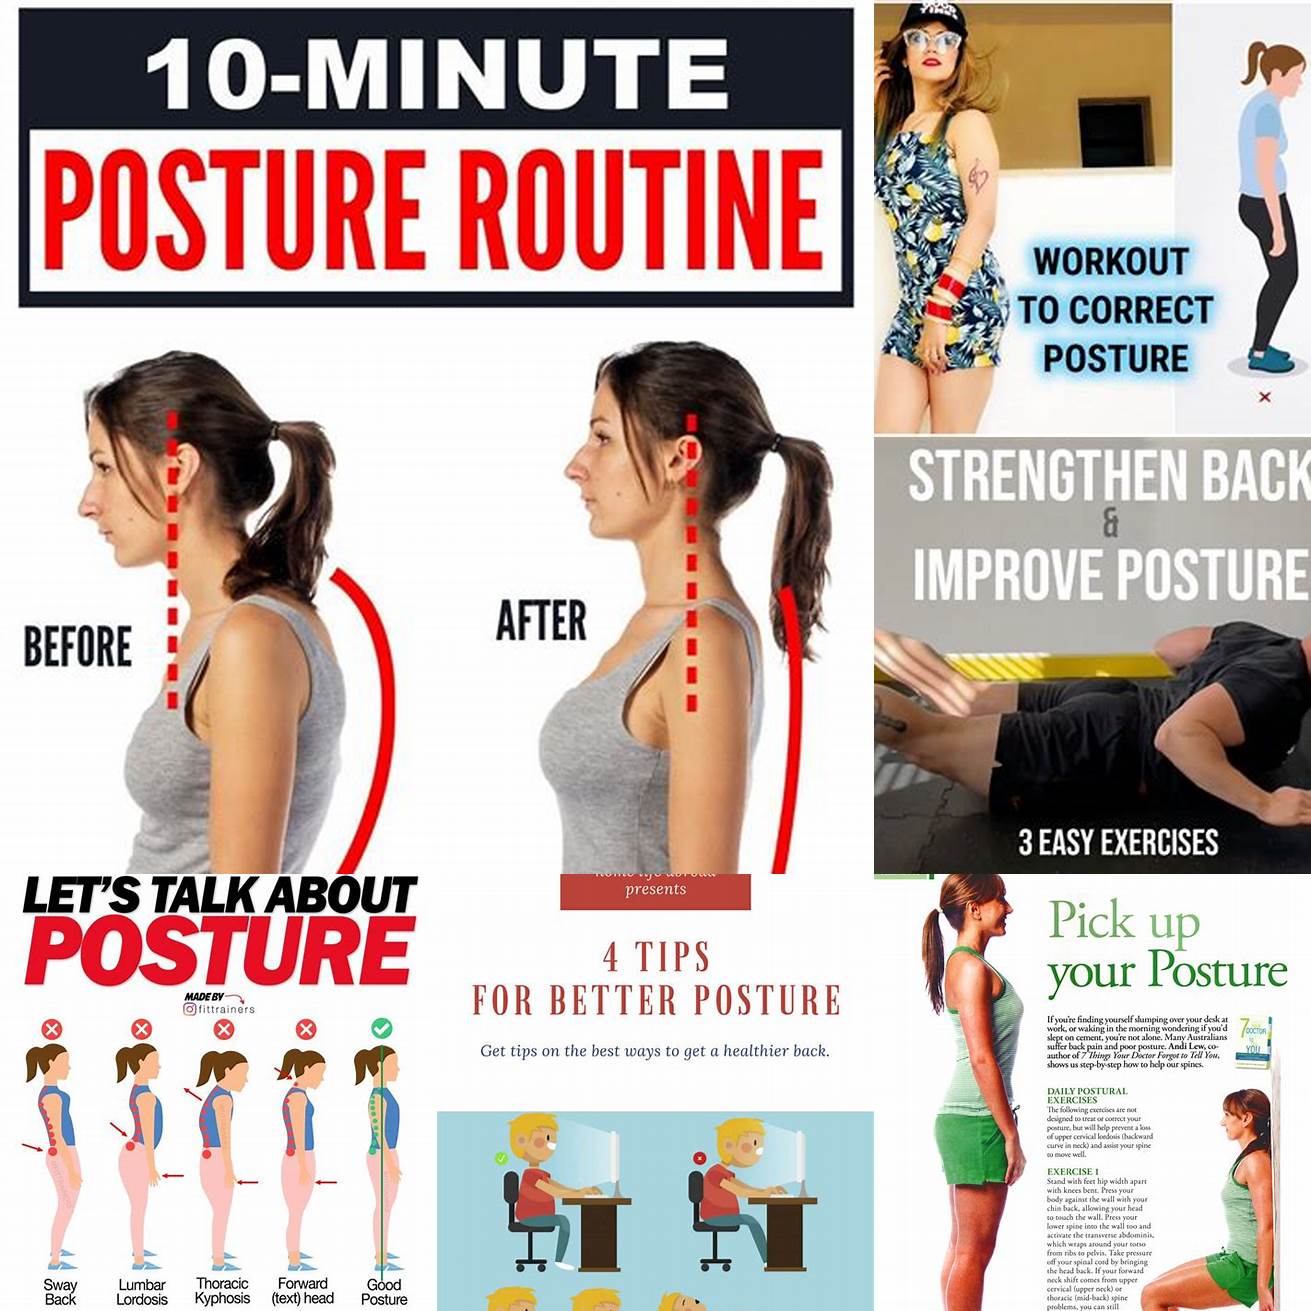 Improves posture